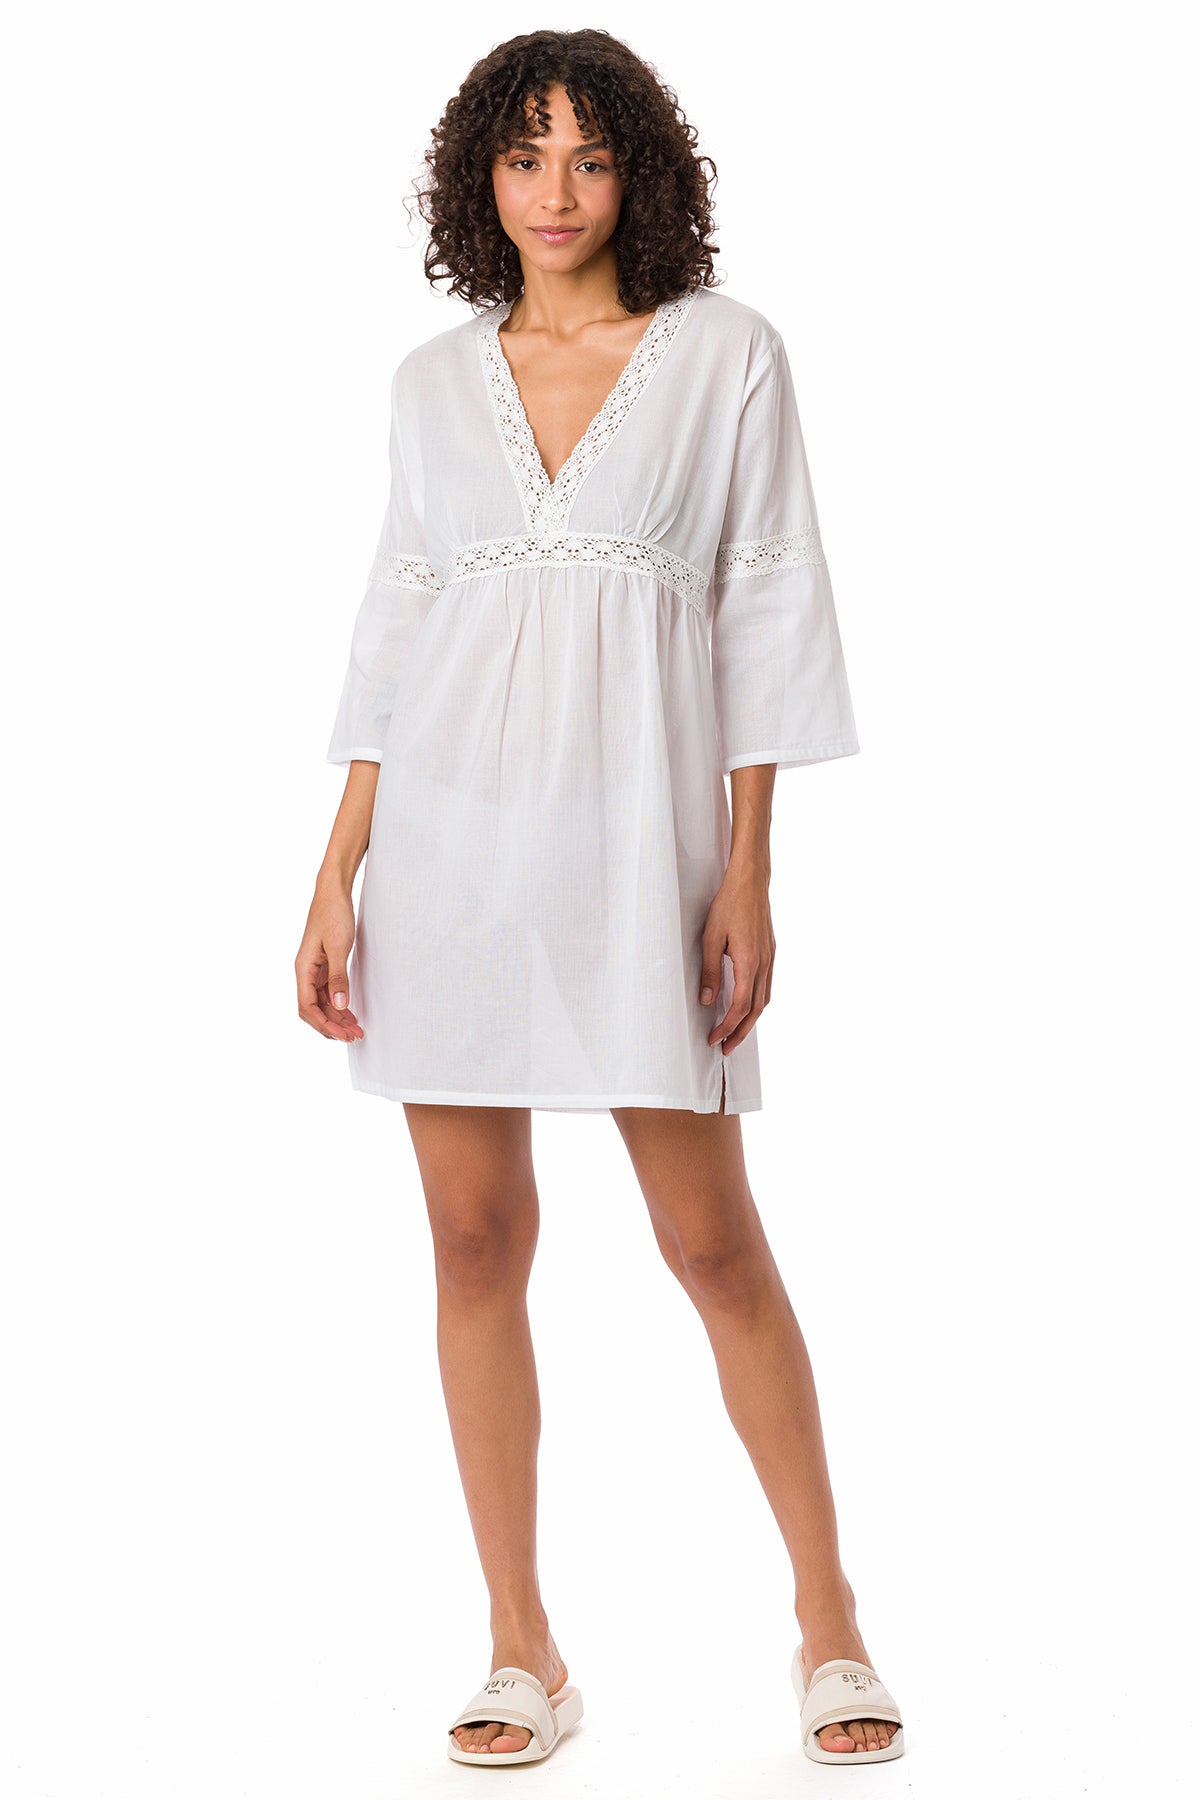 Suvi NYC. Women's short-sleeve summer dress. 100% quality Turkish cotton. 